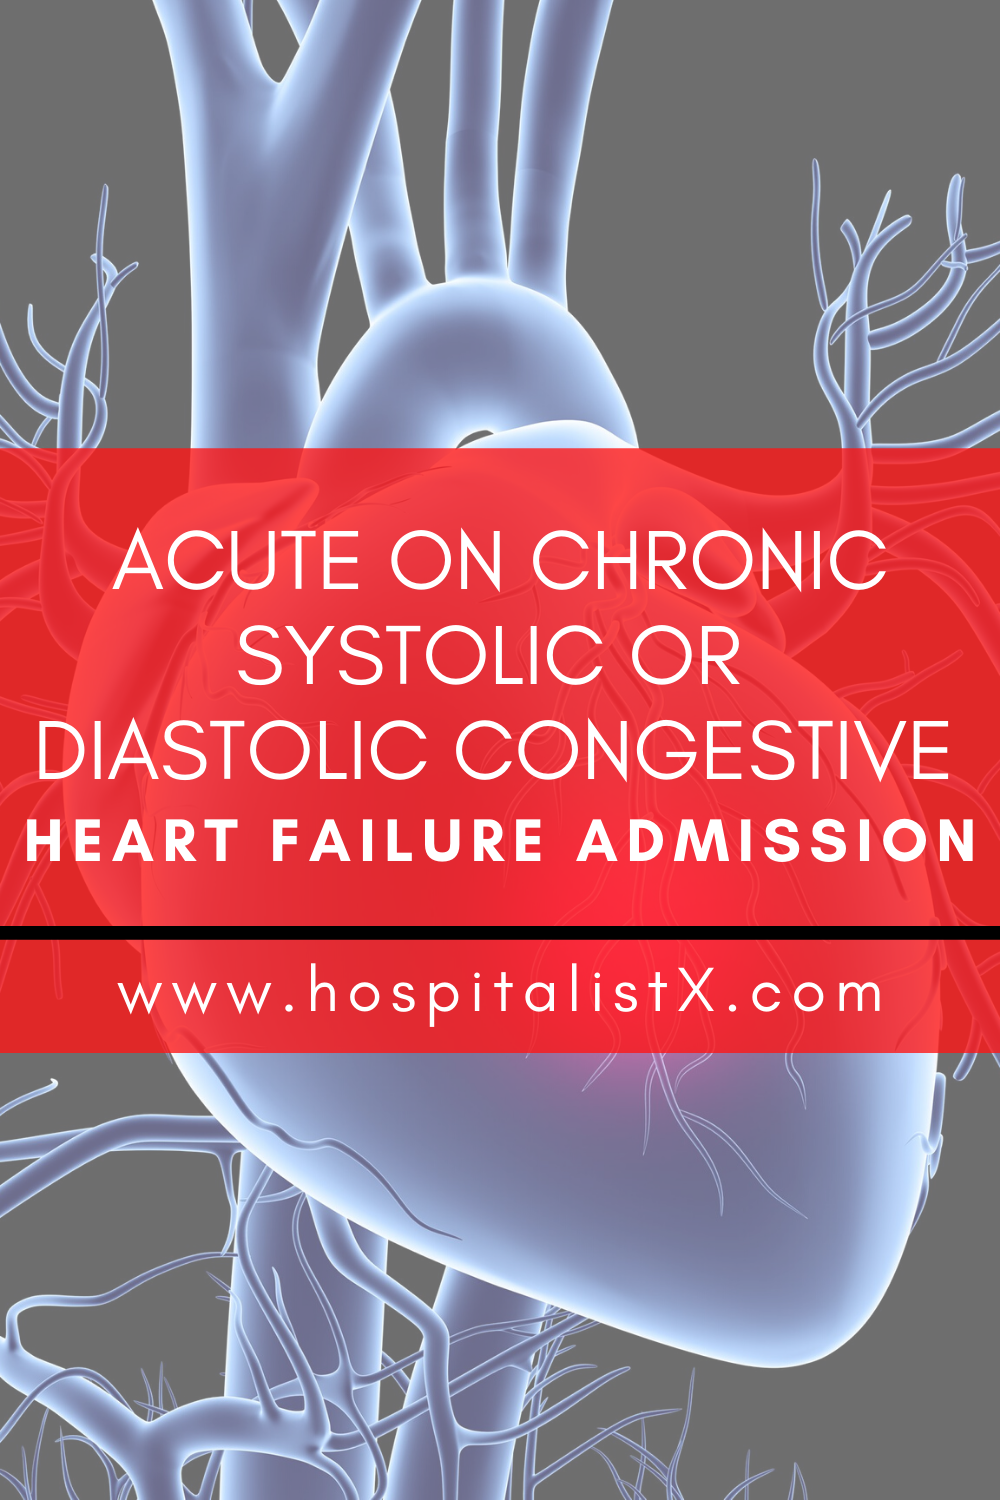 Acute on Chronic Systolic or Diastolic Congestive Heart Failure